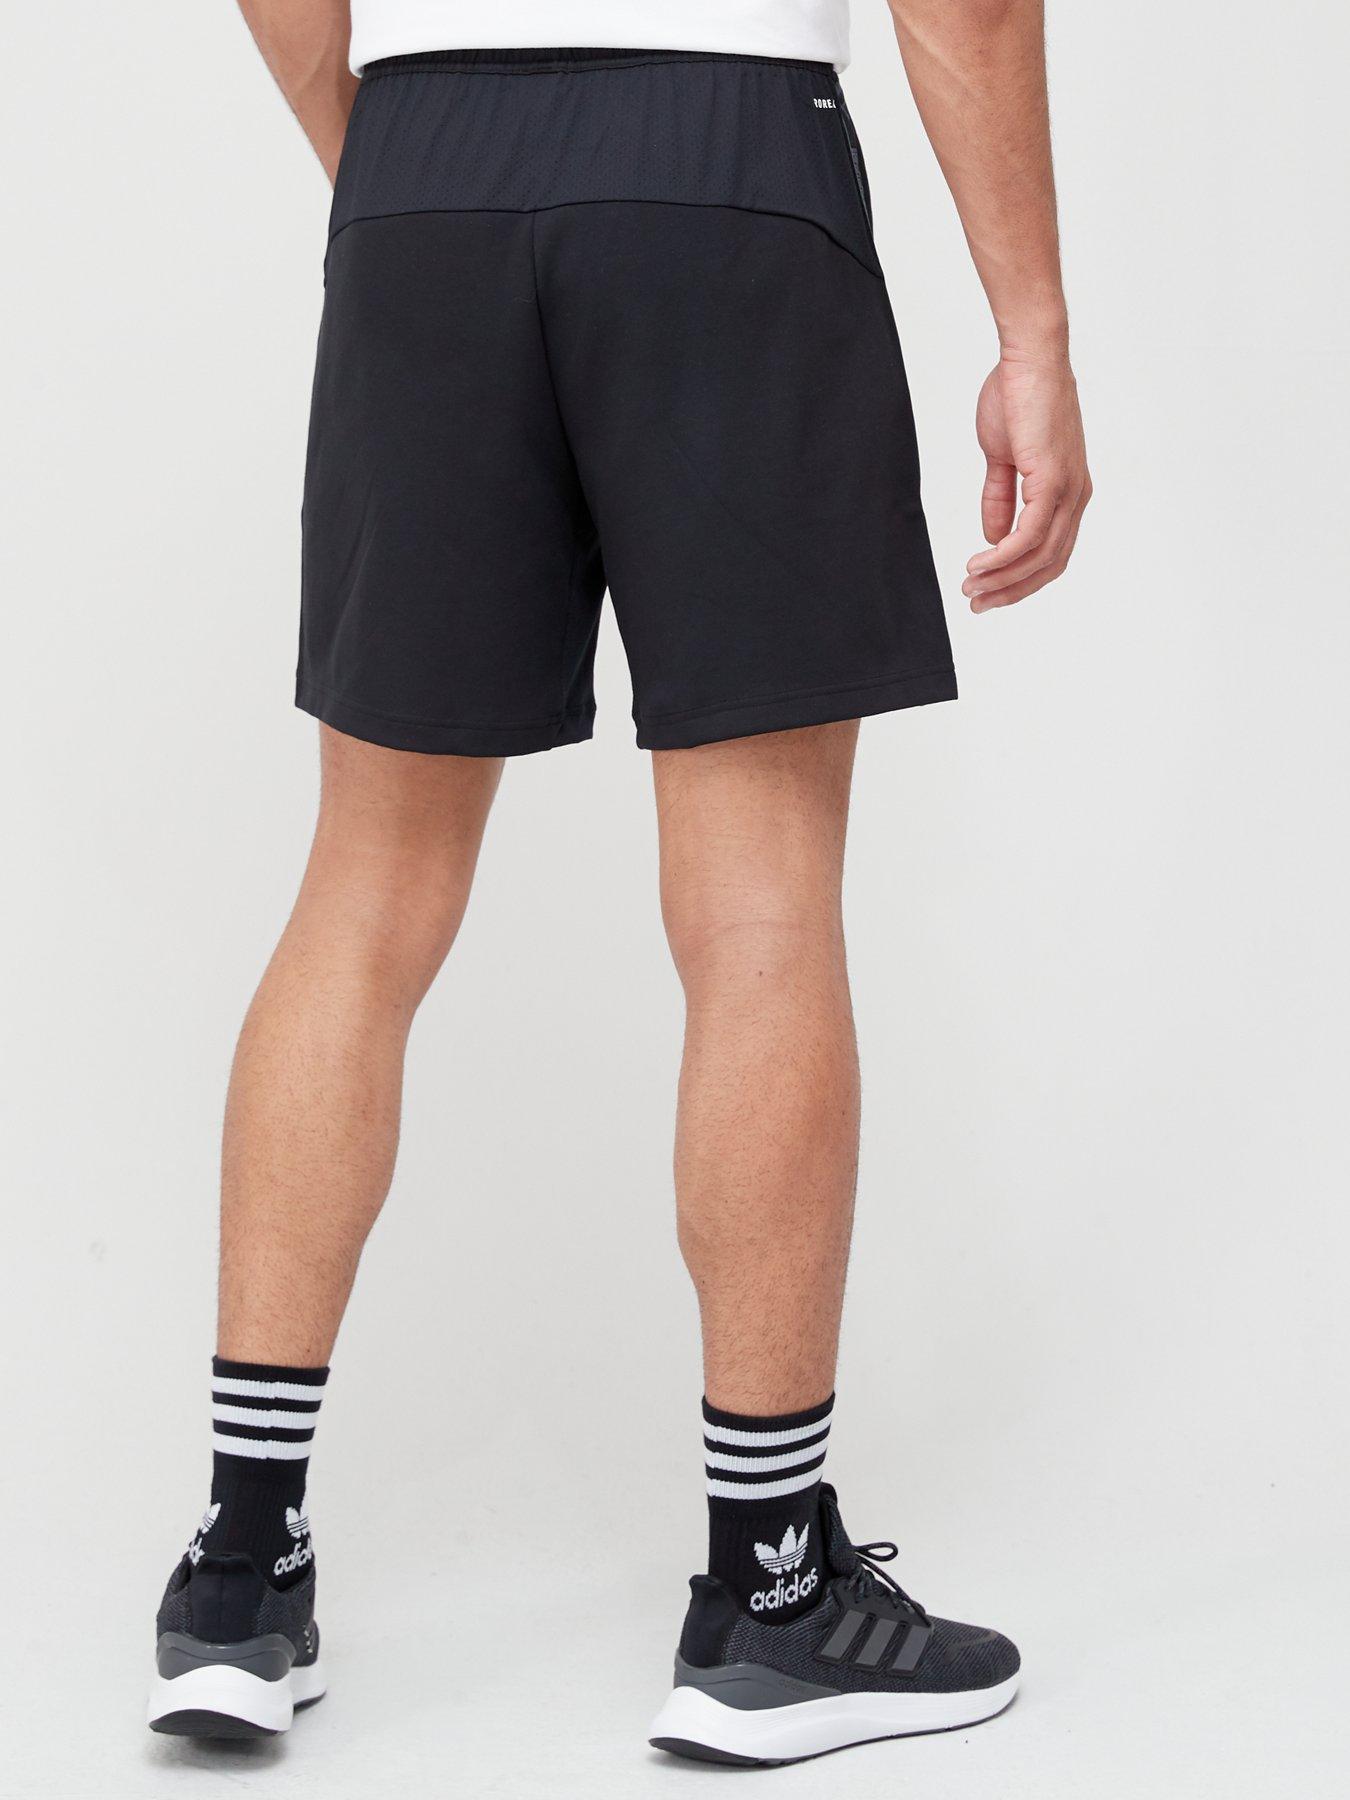 Men Tape Shorts - Black/White